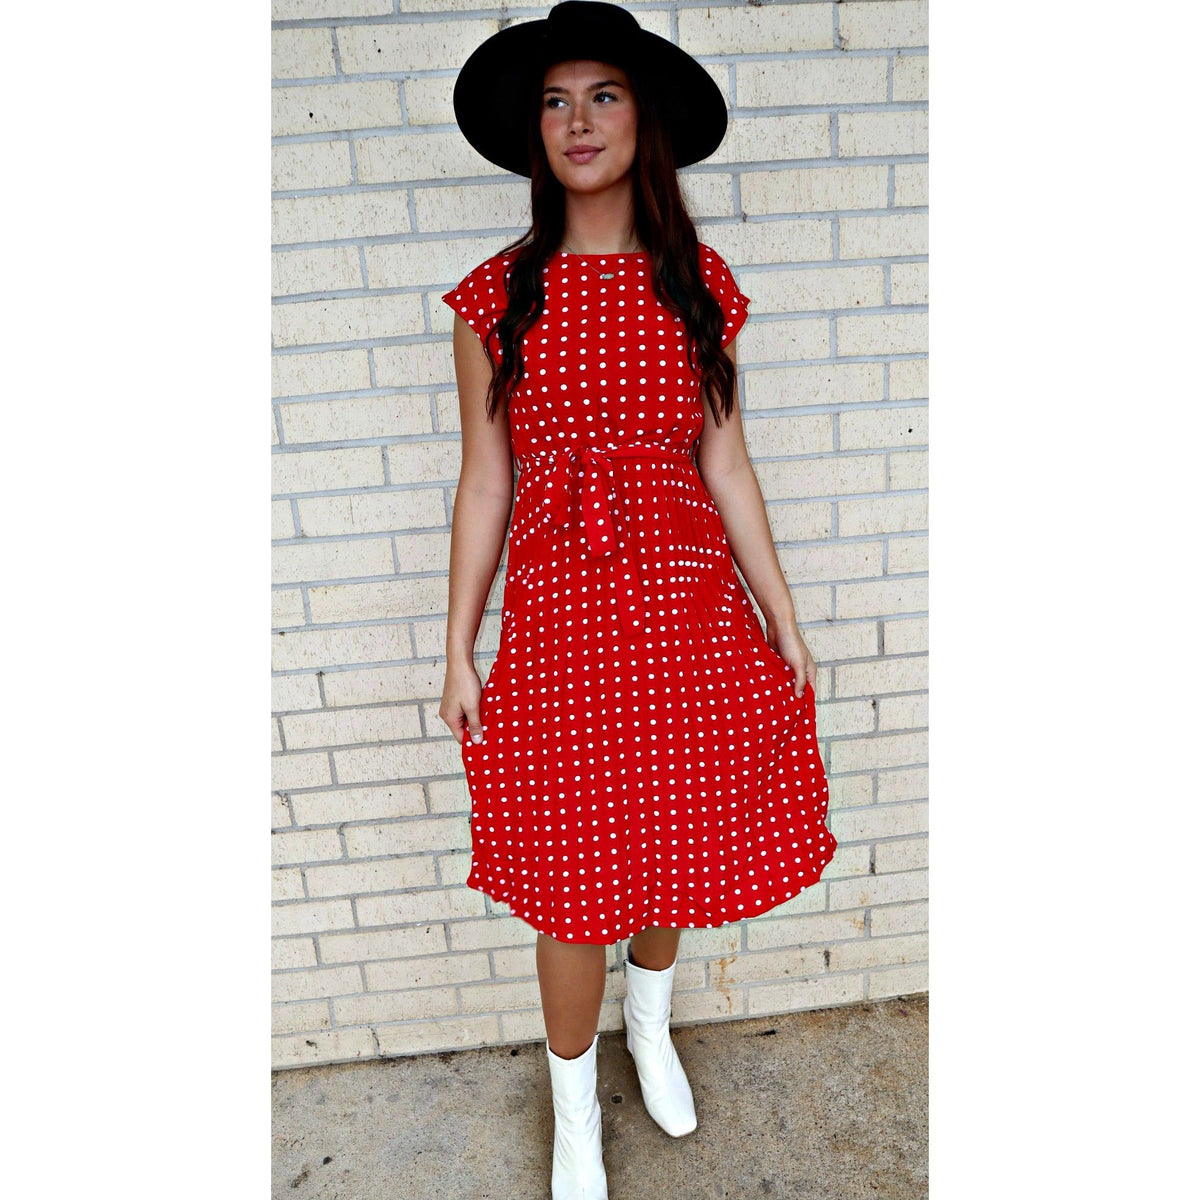 Red dot dress